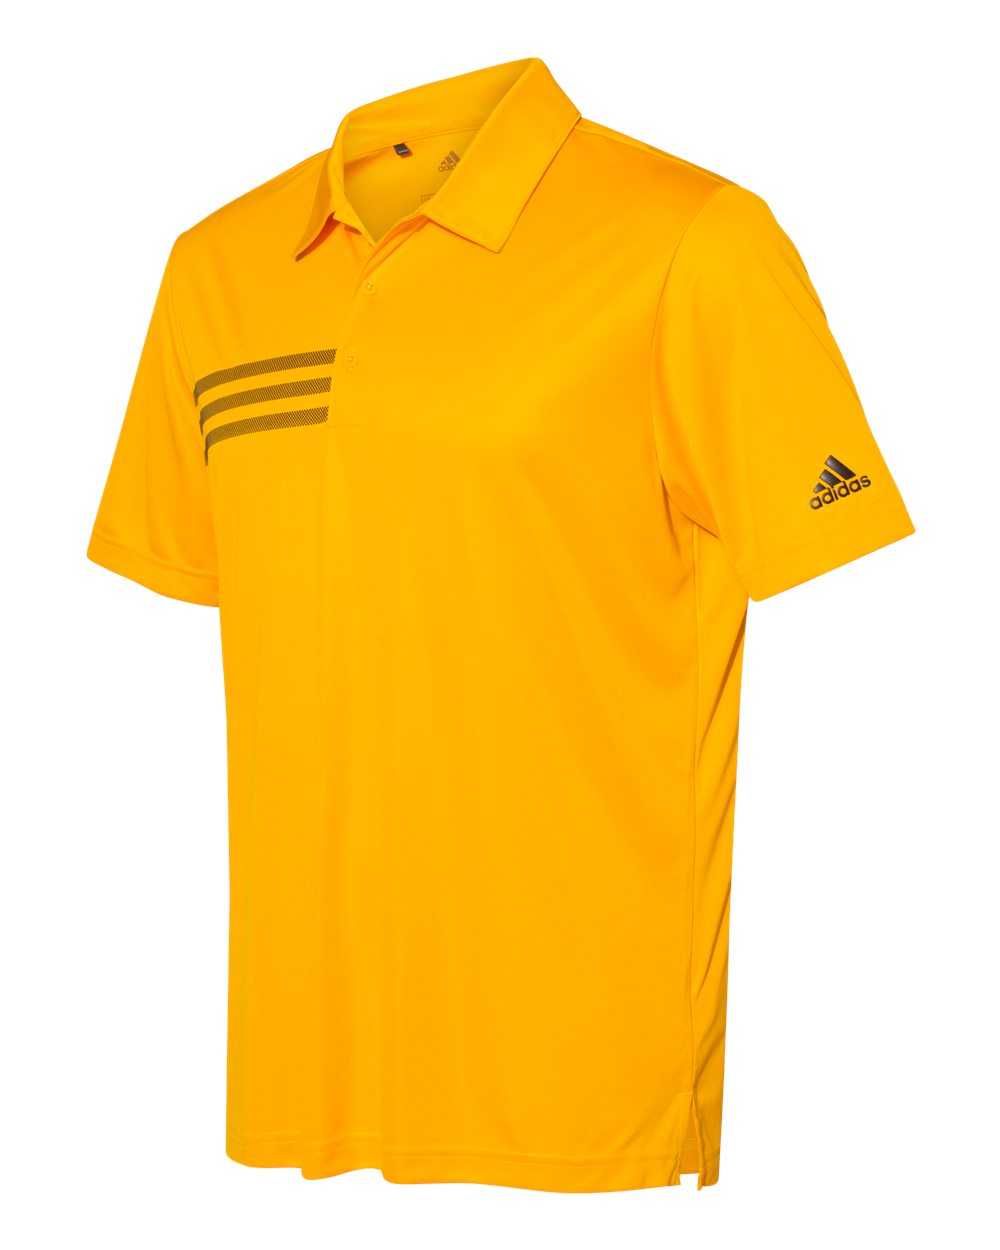 Adidas A324 3-Stripes Chest Sport Shirt - Team Collegiate Gold Black - HIT a Double